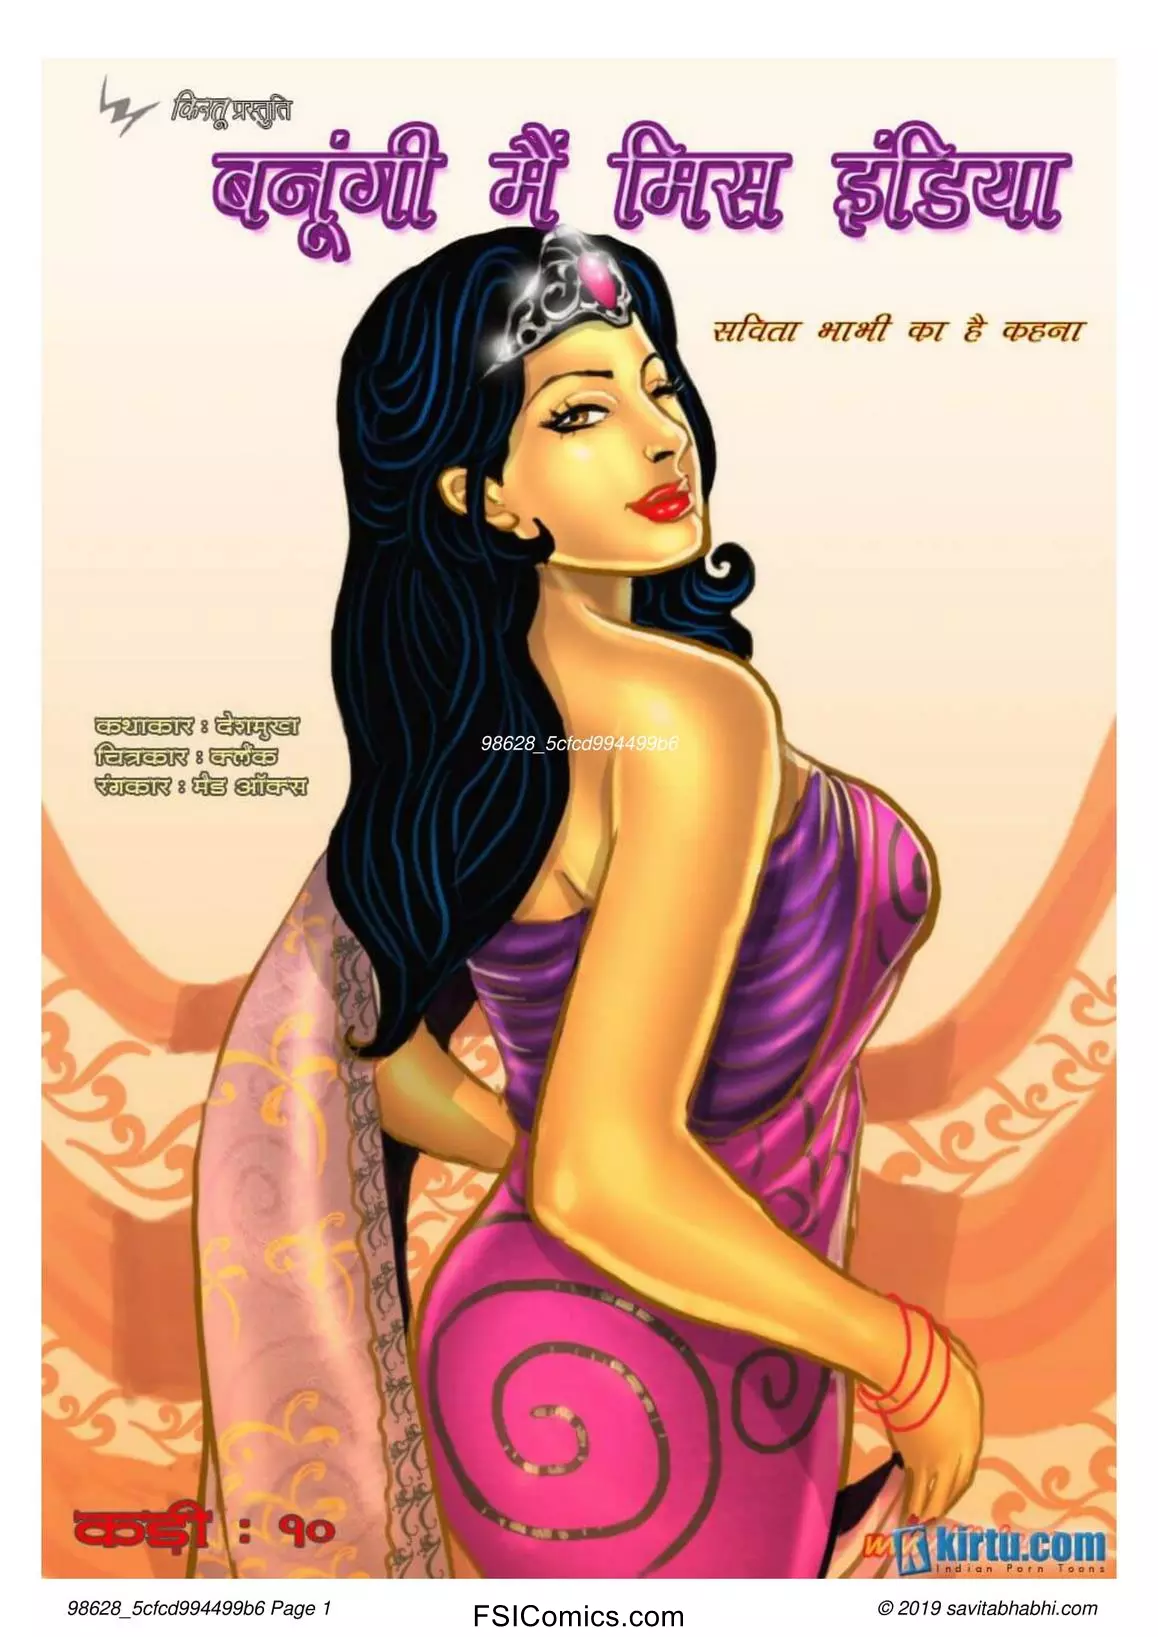 Savita Bhabhi Episode 10 Hindi – Main Banugi Miss India- (मैं बनूँगी मिस इन्डिया) - 31 - FSIComics